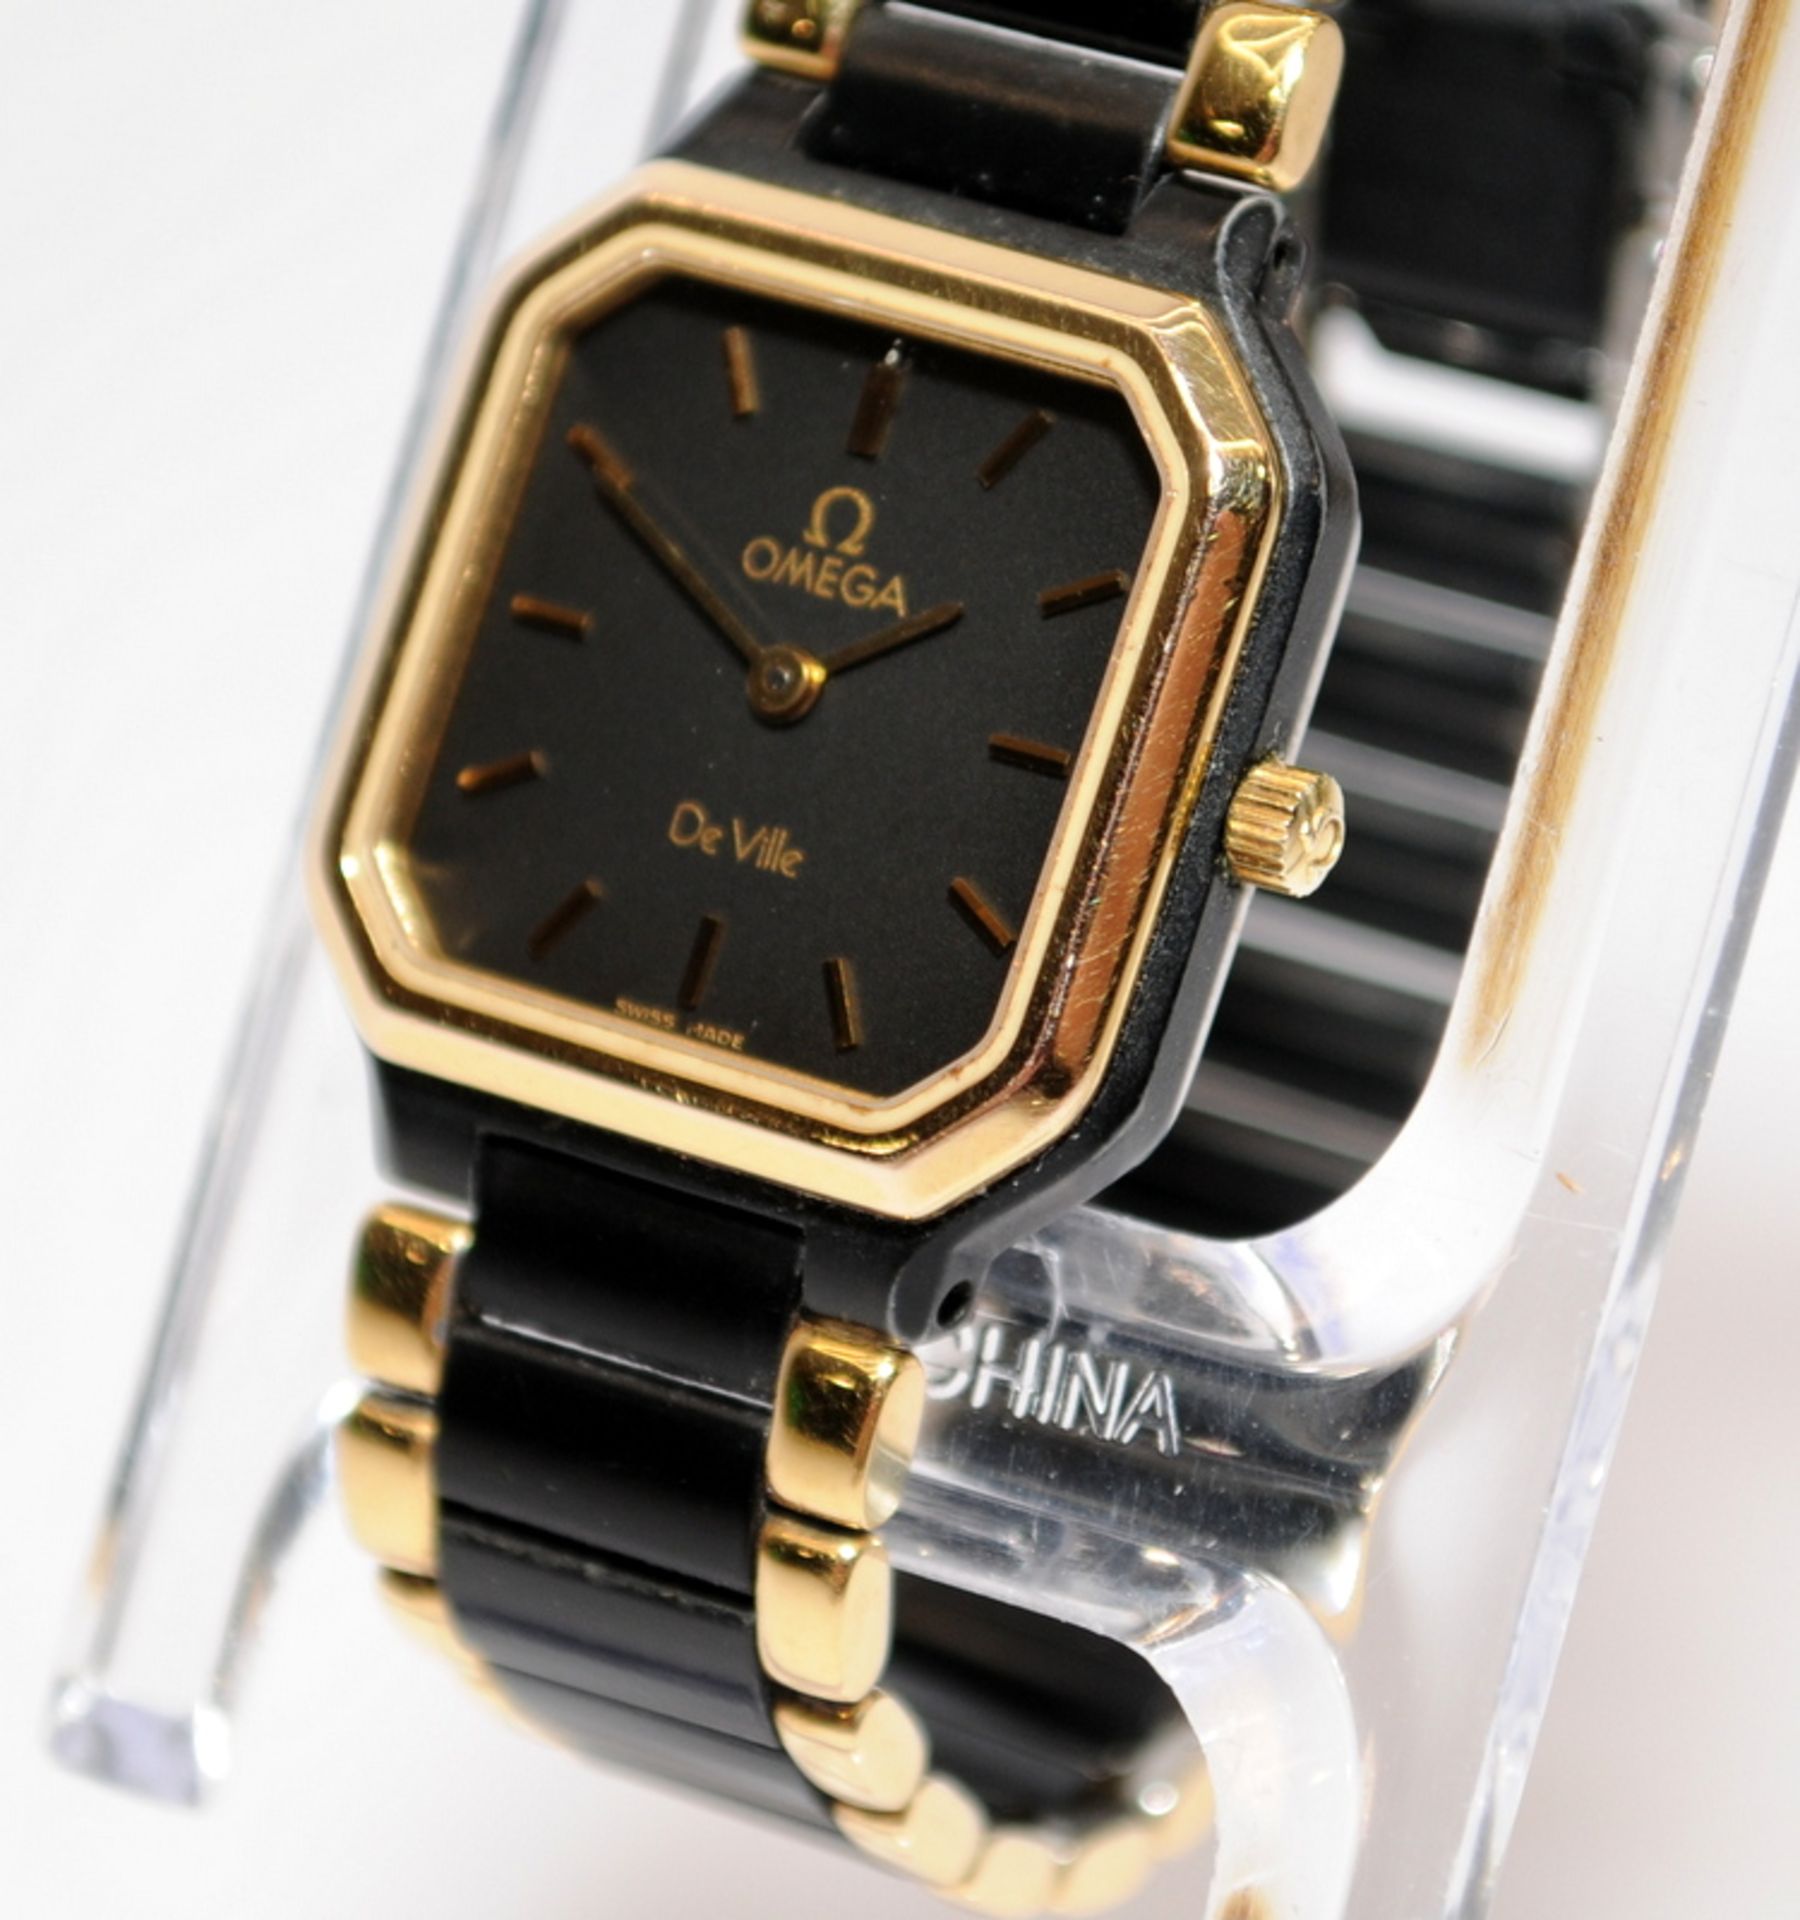 Omega De Ville ladies quartz watch. Black enamel and gp bracelet. Battery fitted and working fine.